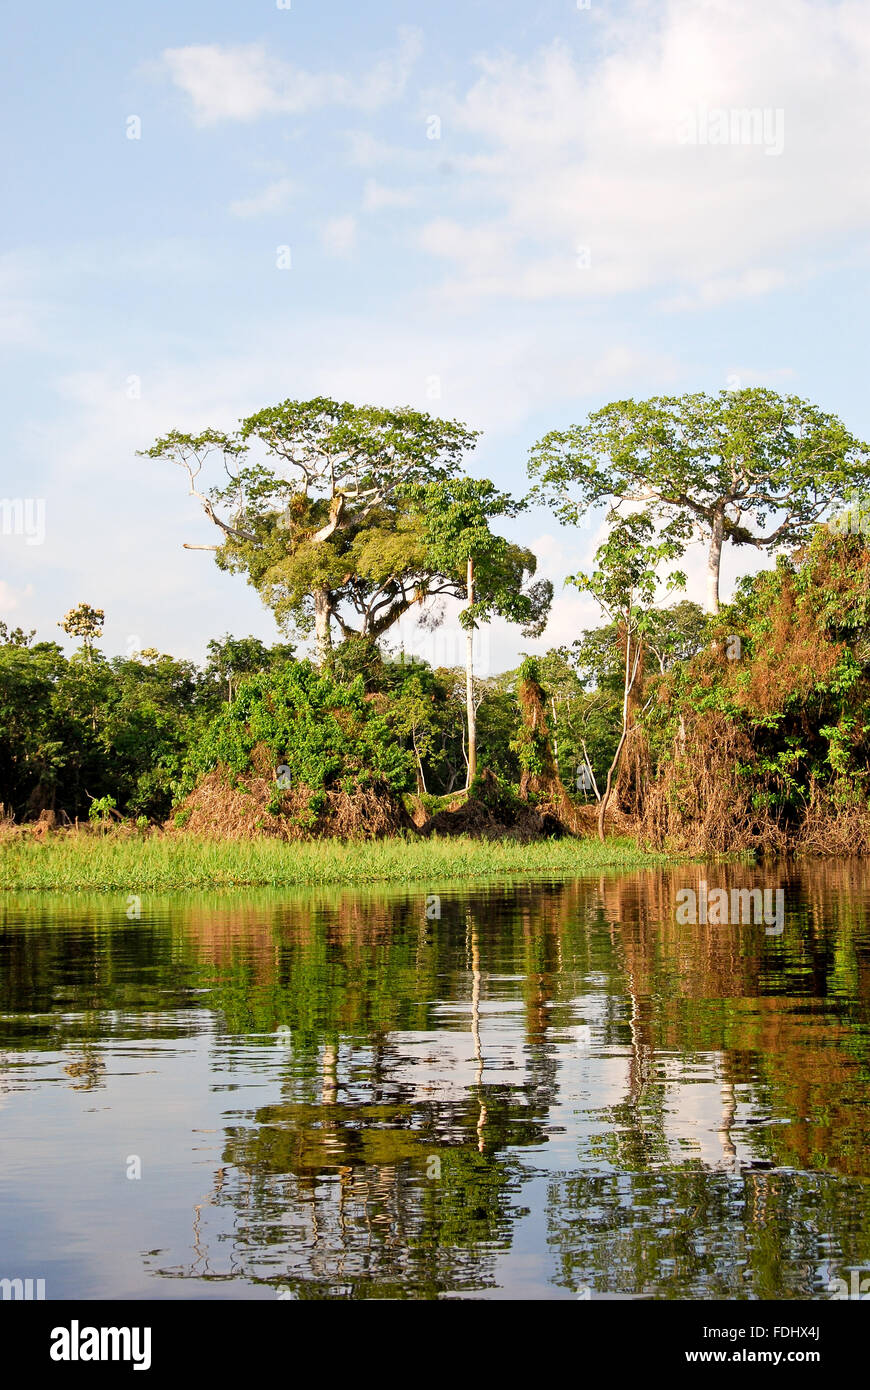 Amazon Rainforest Natural Landscape Along The Amazon River Near Manaus